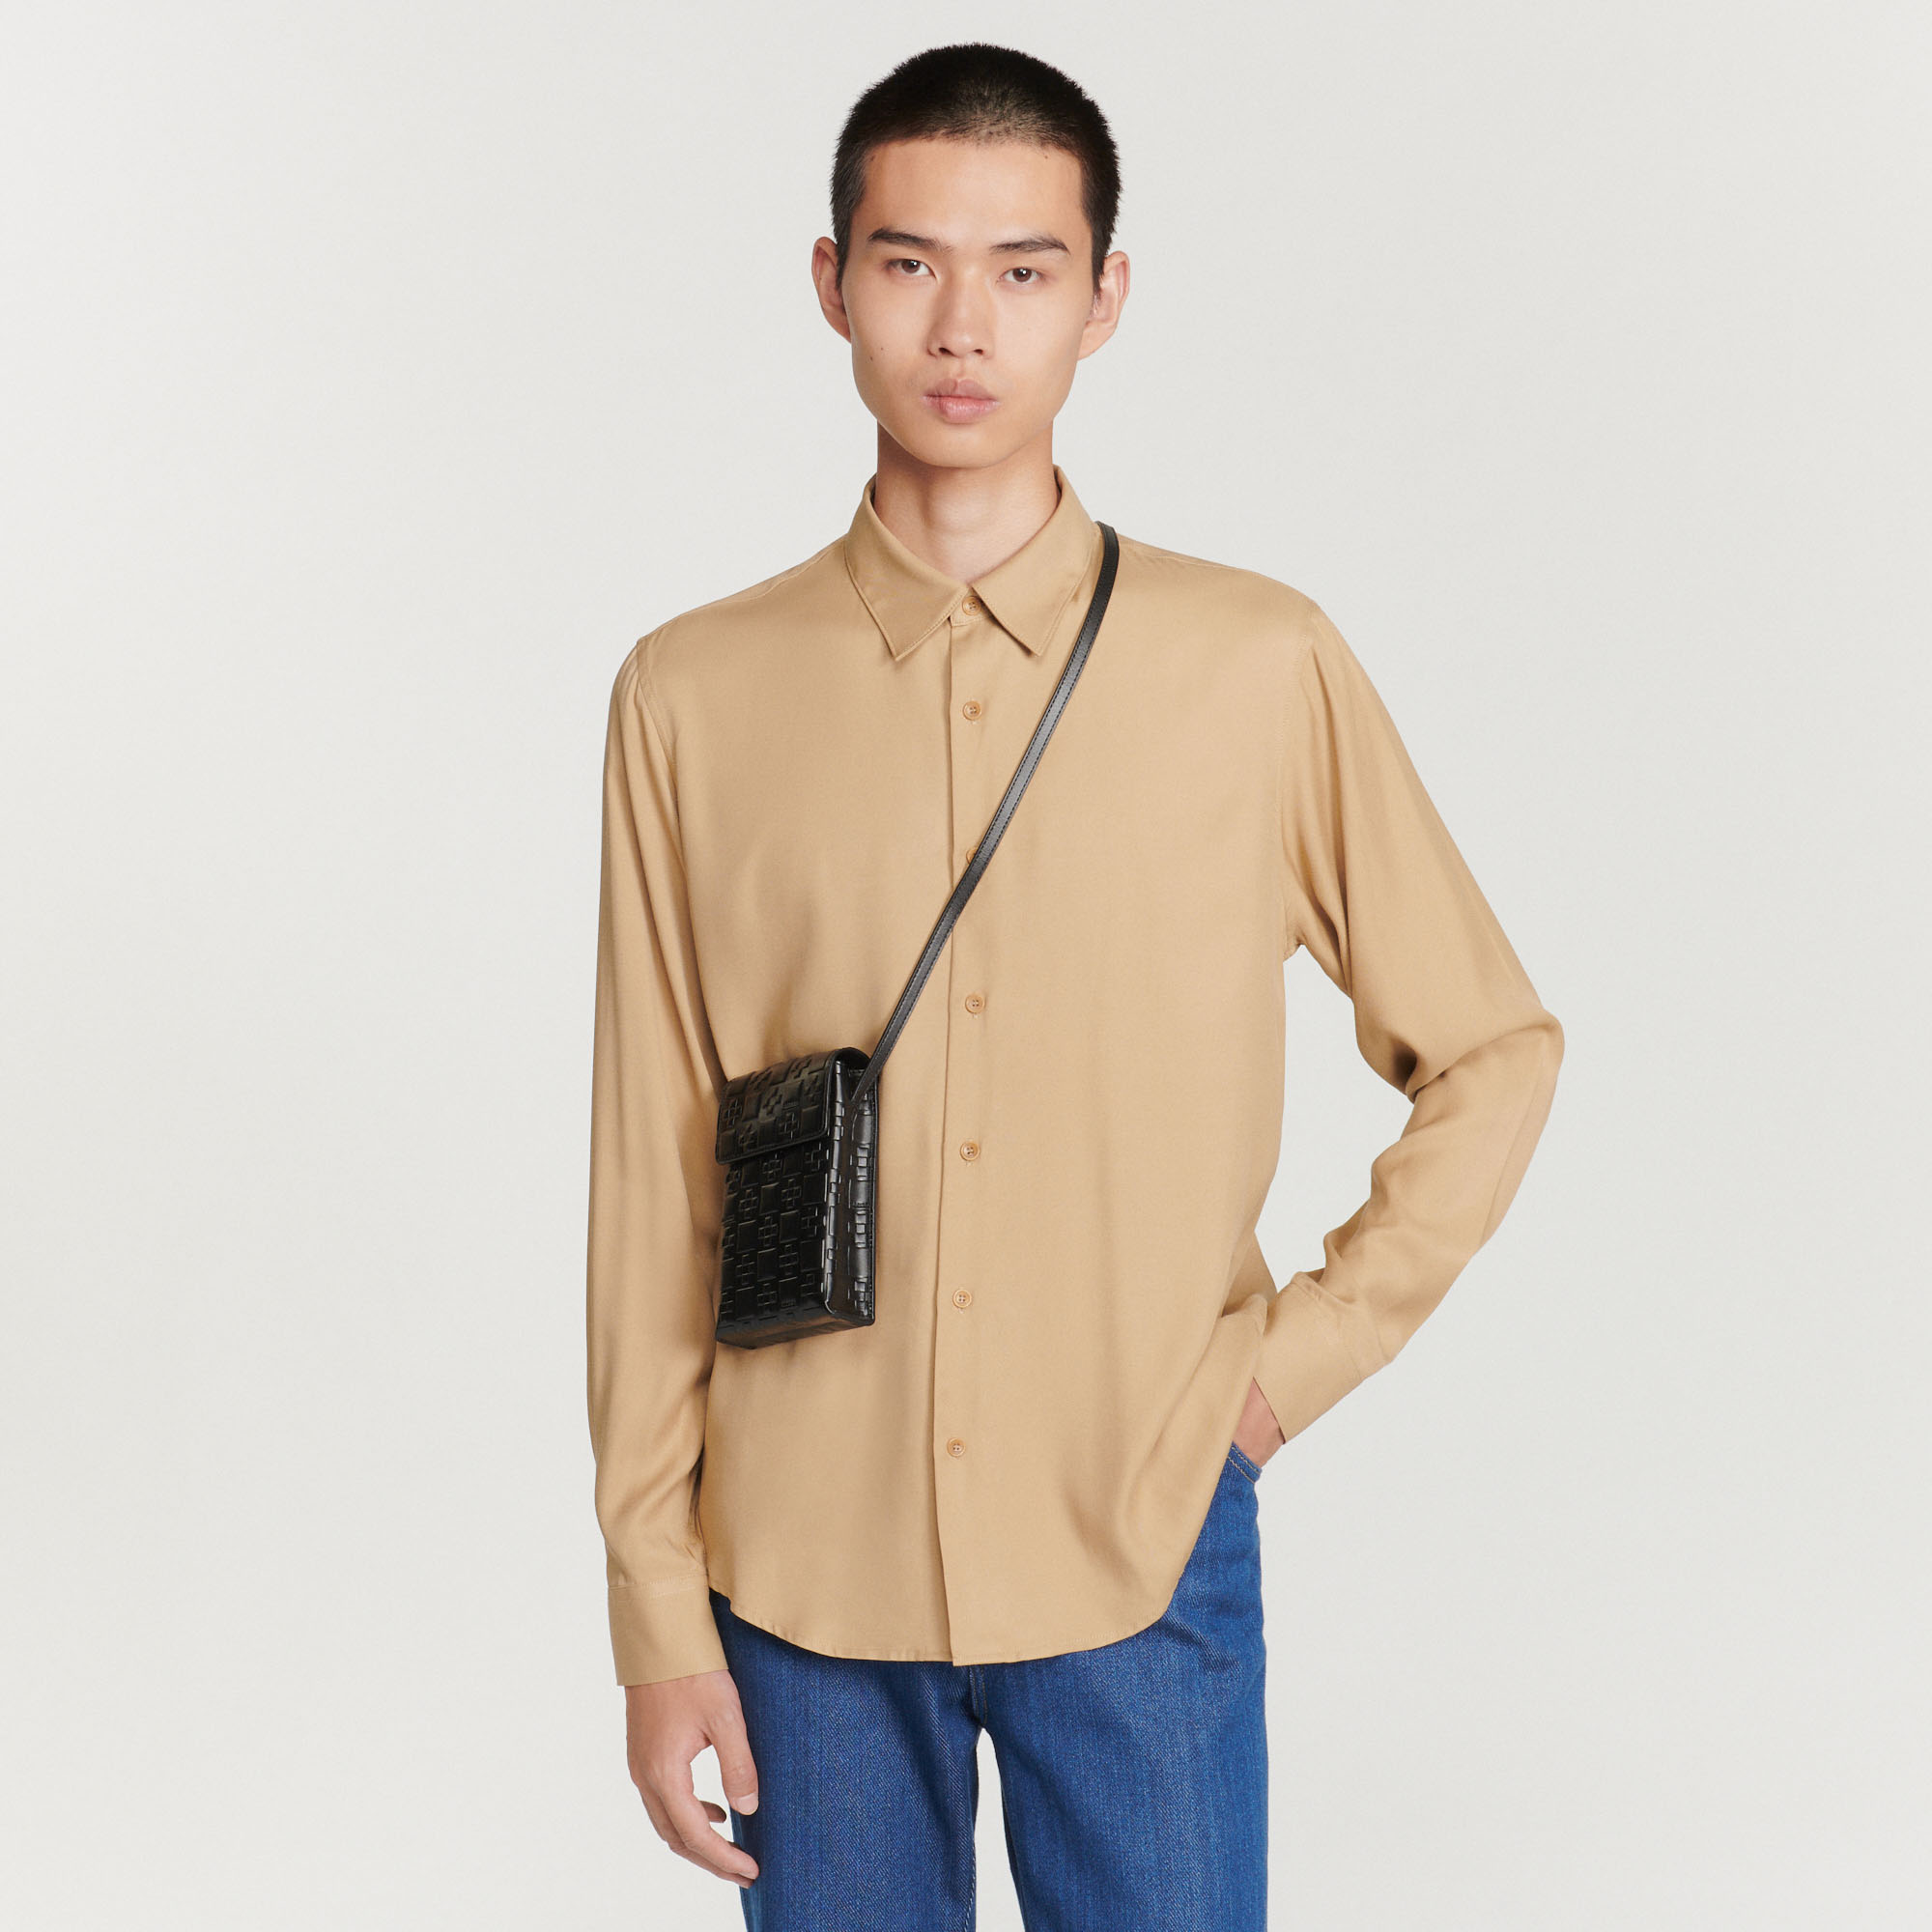 Man bag crossbody shoulder Genuine leather handbag work utility tan brown  black | eBay